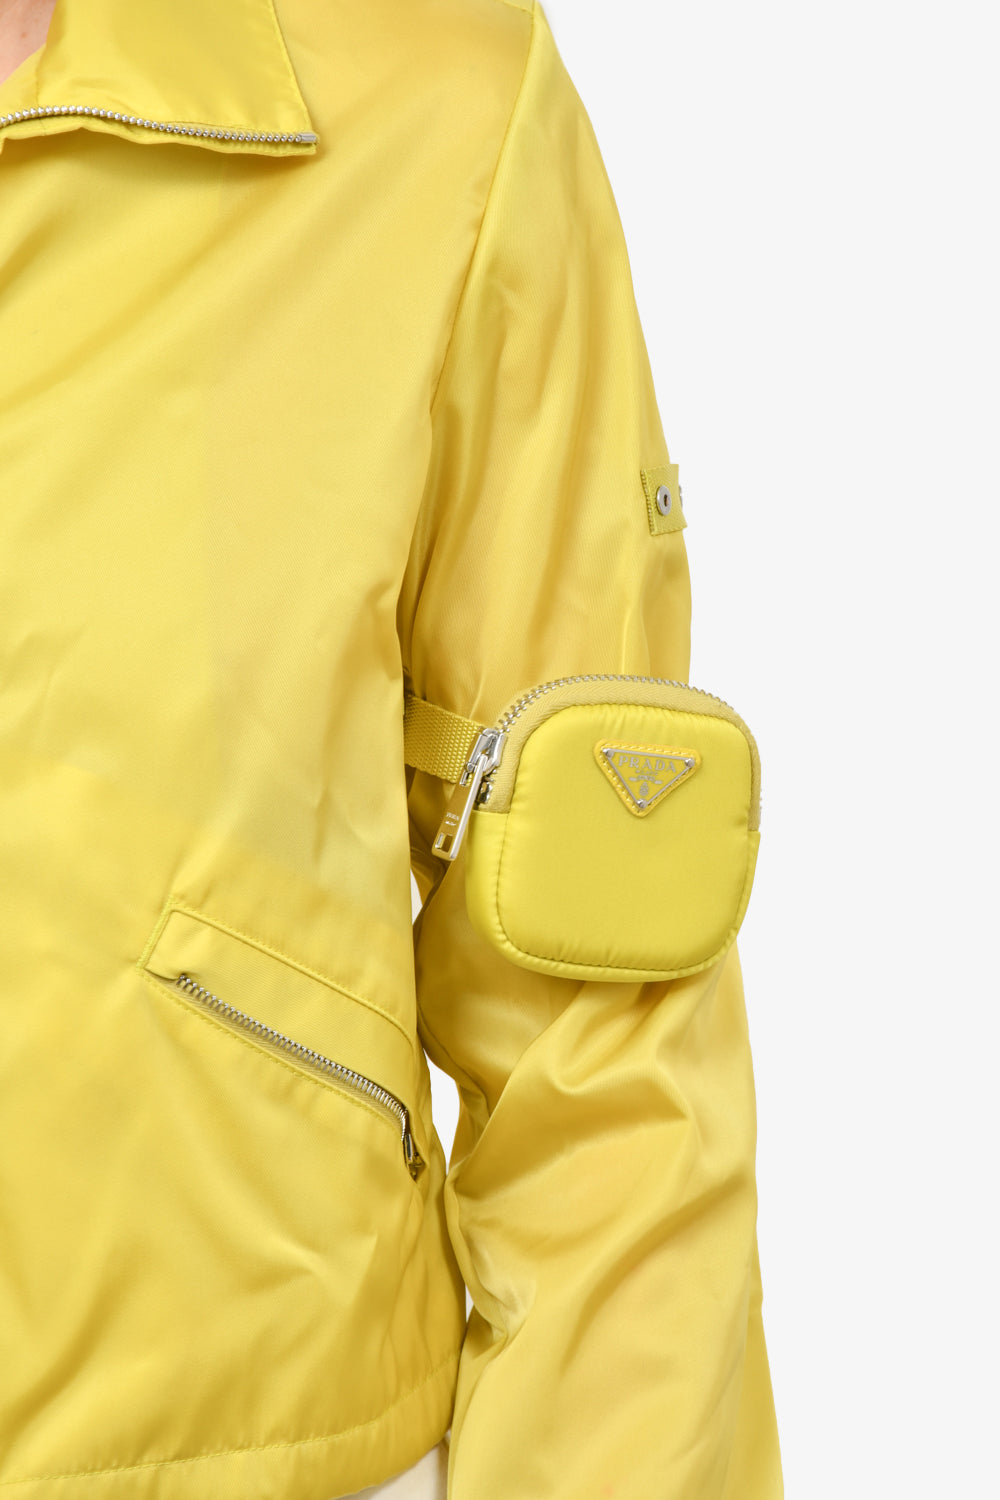 Louis Vuitton Green Camouflage/Monogram Nylon Zip Jacket with Hood Siz –  Mine & Yours